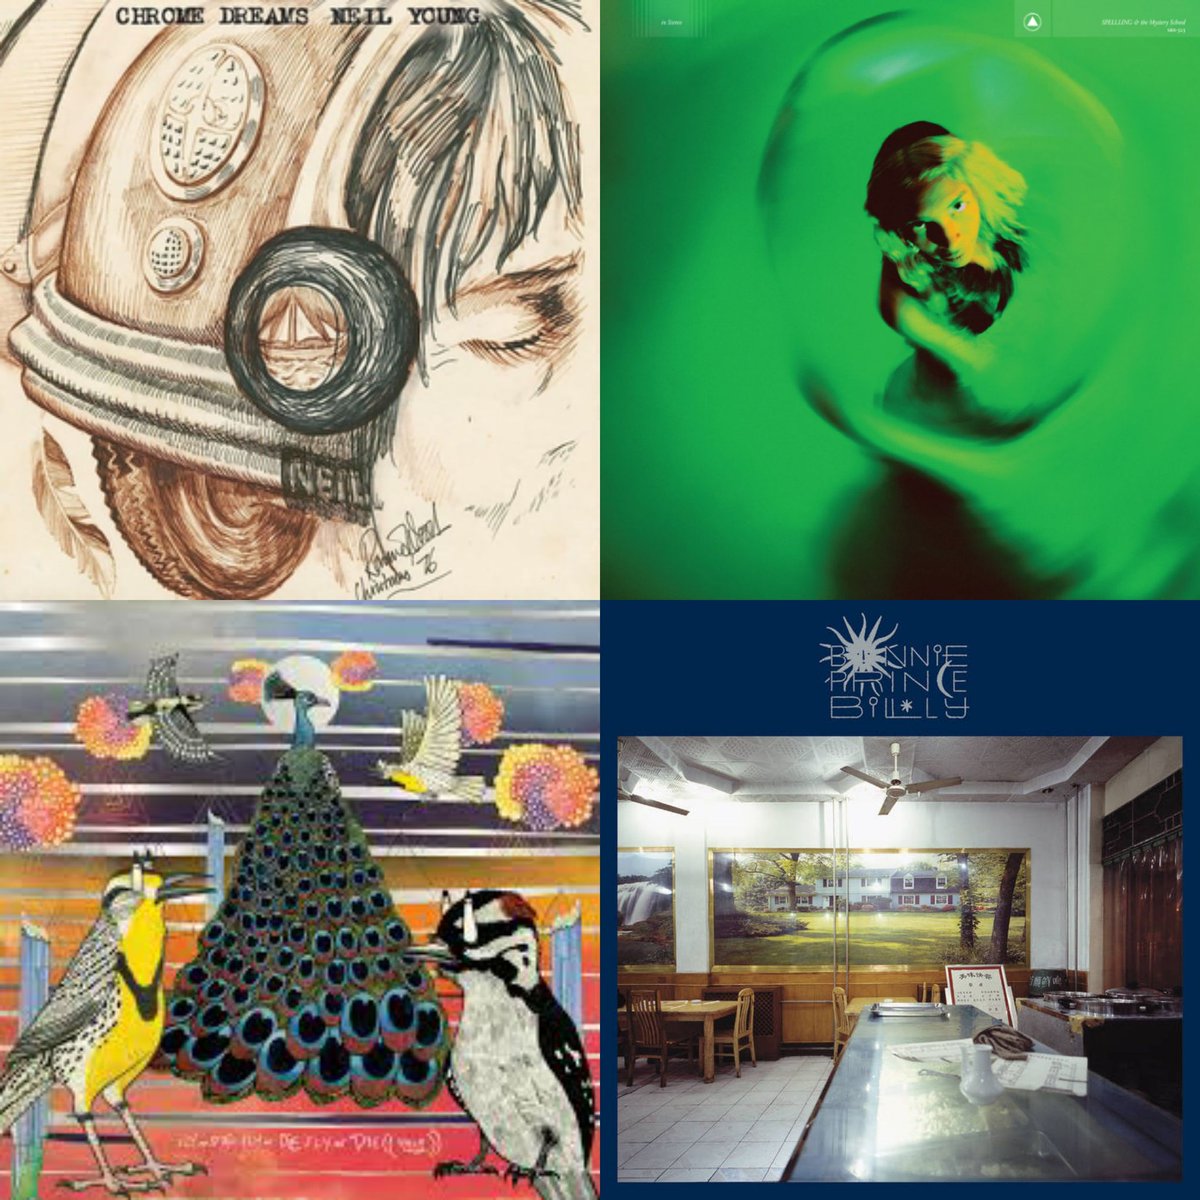 Favourite albums August 2023 ❤️
#NeilYoung #Spellling #JaimieBranch #BonniePrinceBilly